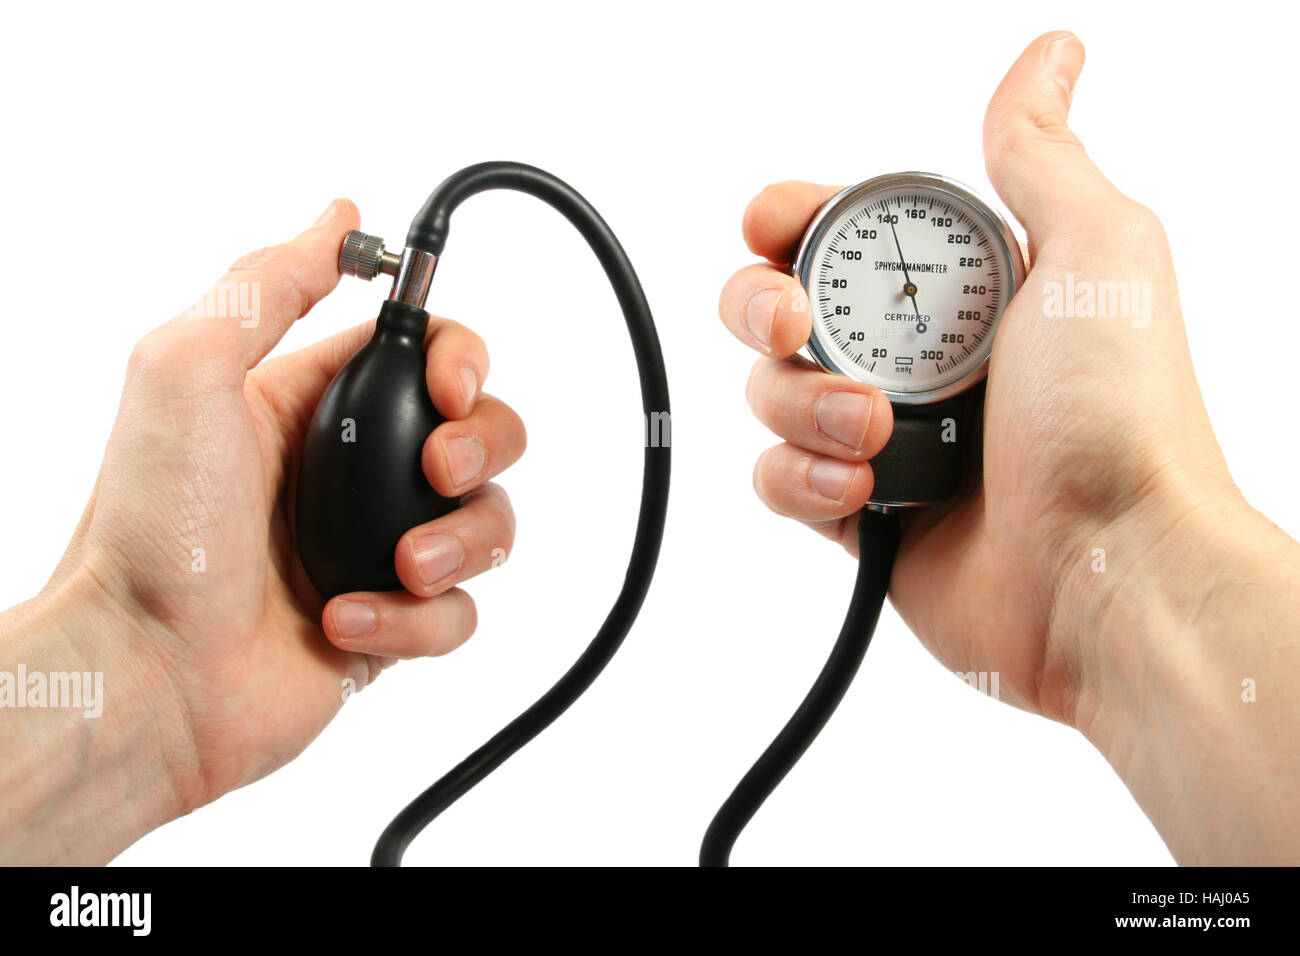 Blood pressure gauge in the hands Stock Photo